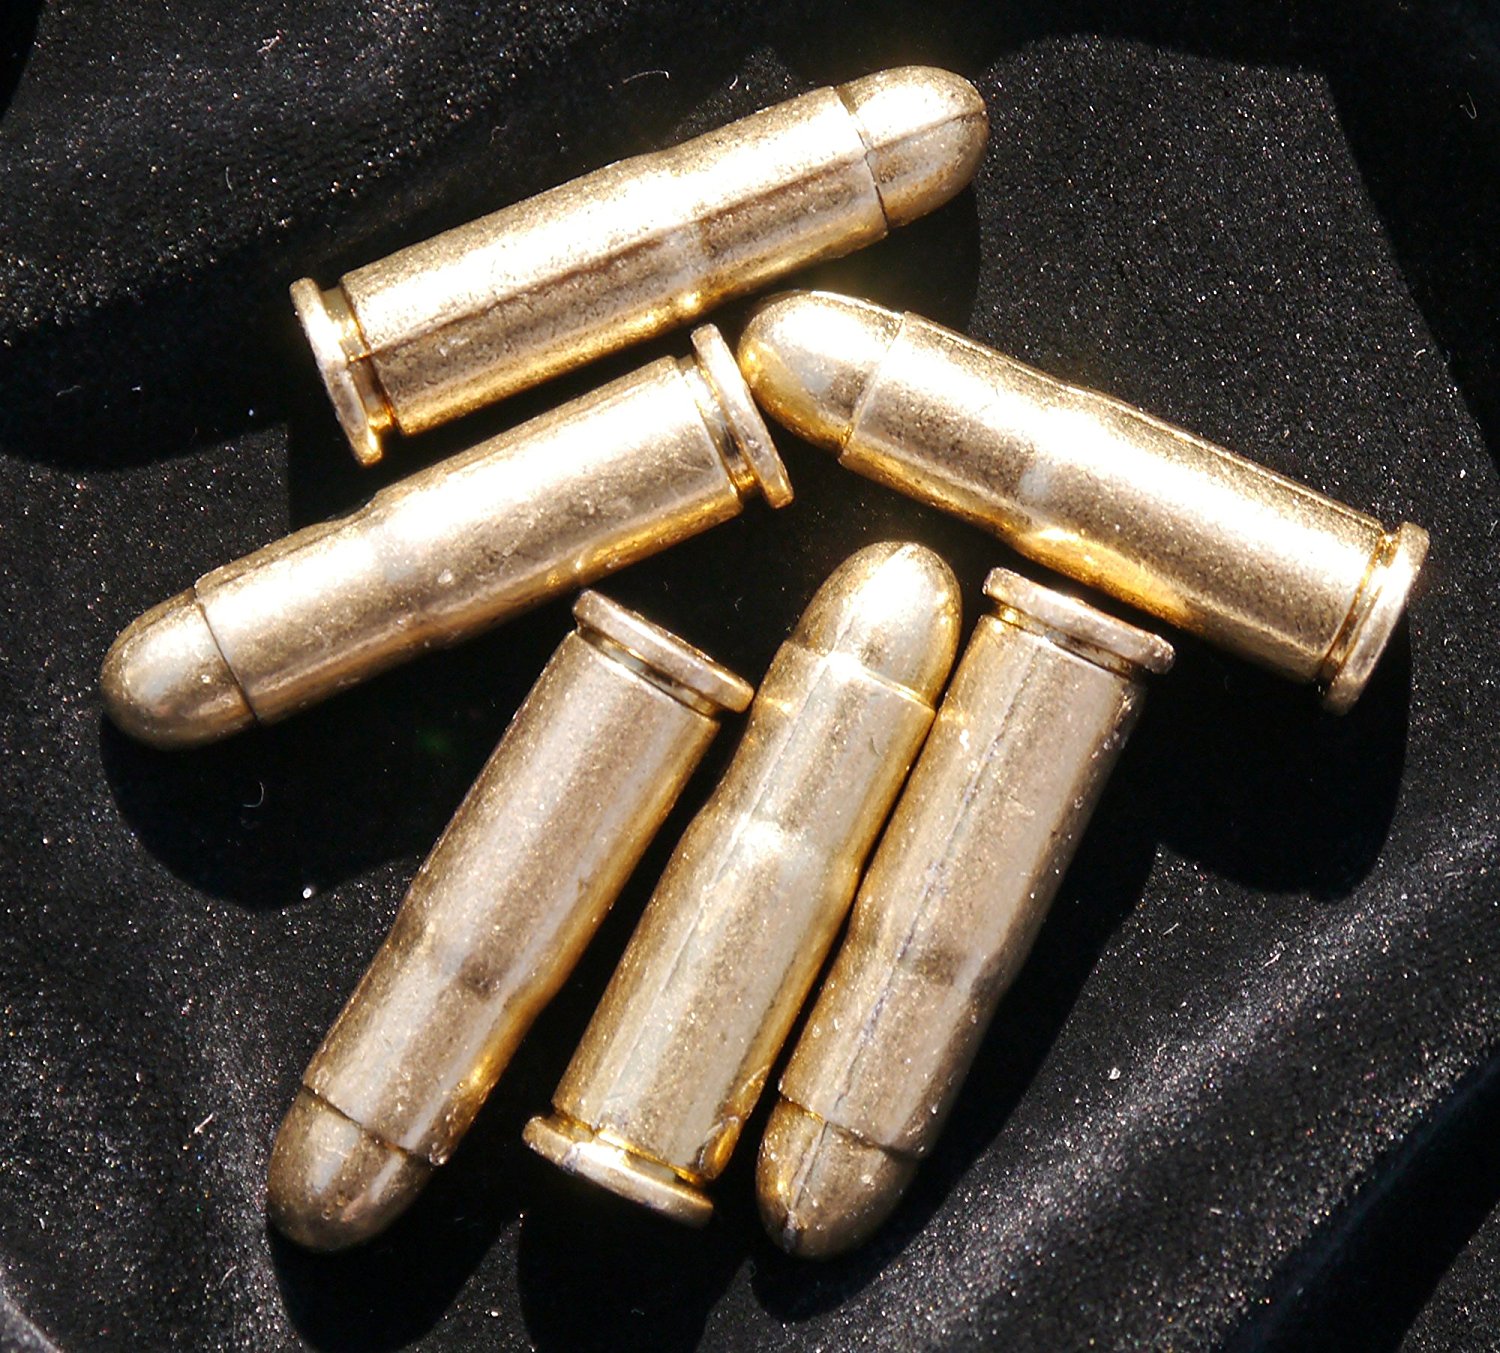 Amazon.com : 6 Replica Rifle Bullets - Denix Colt Gun Dummy Ammo ...